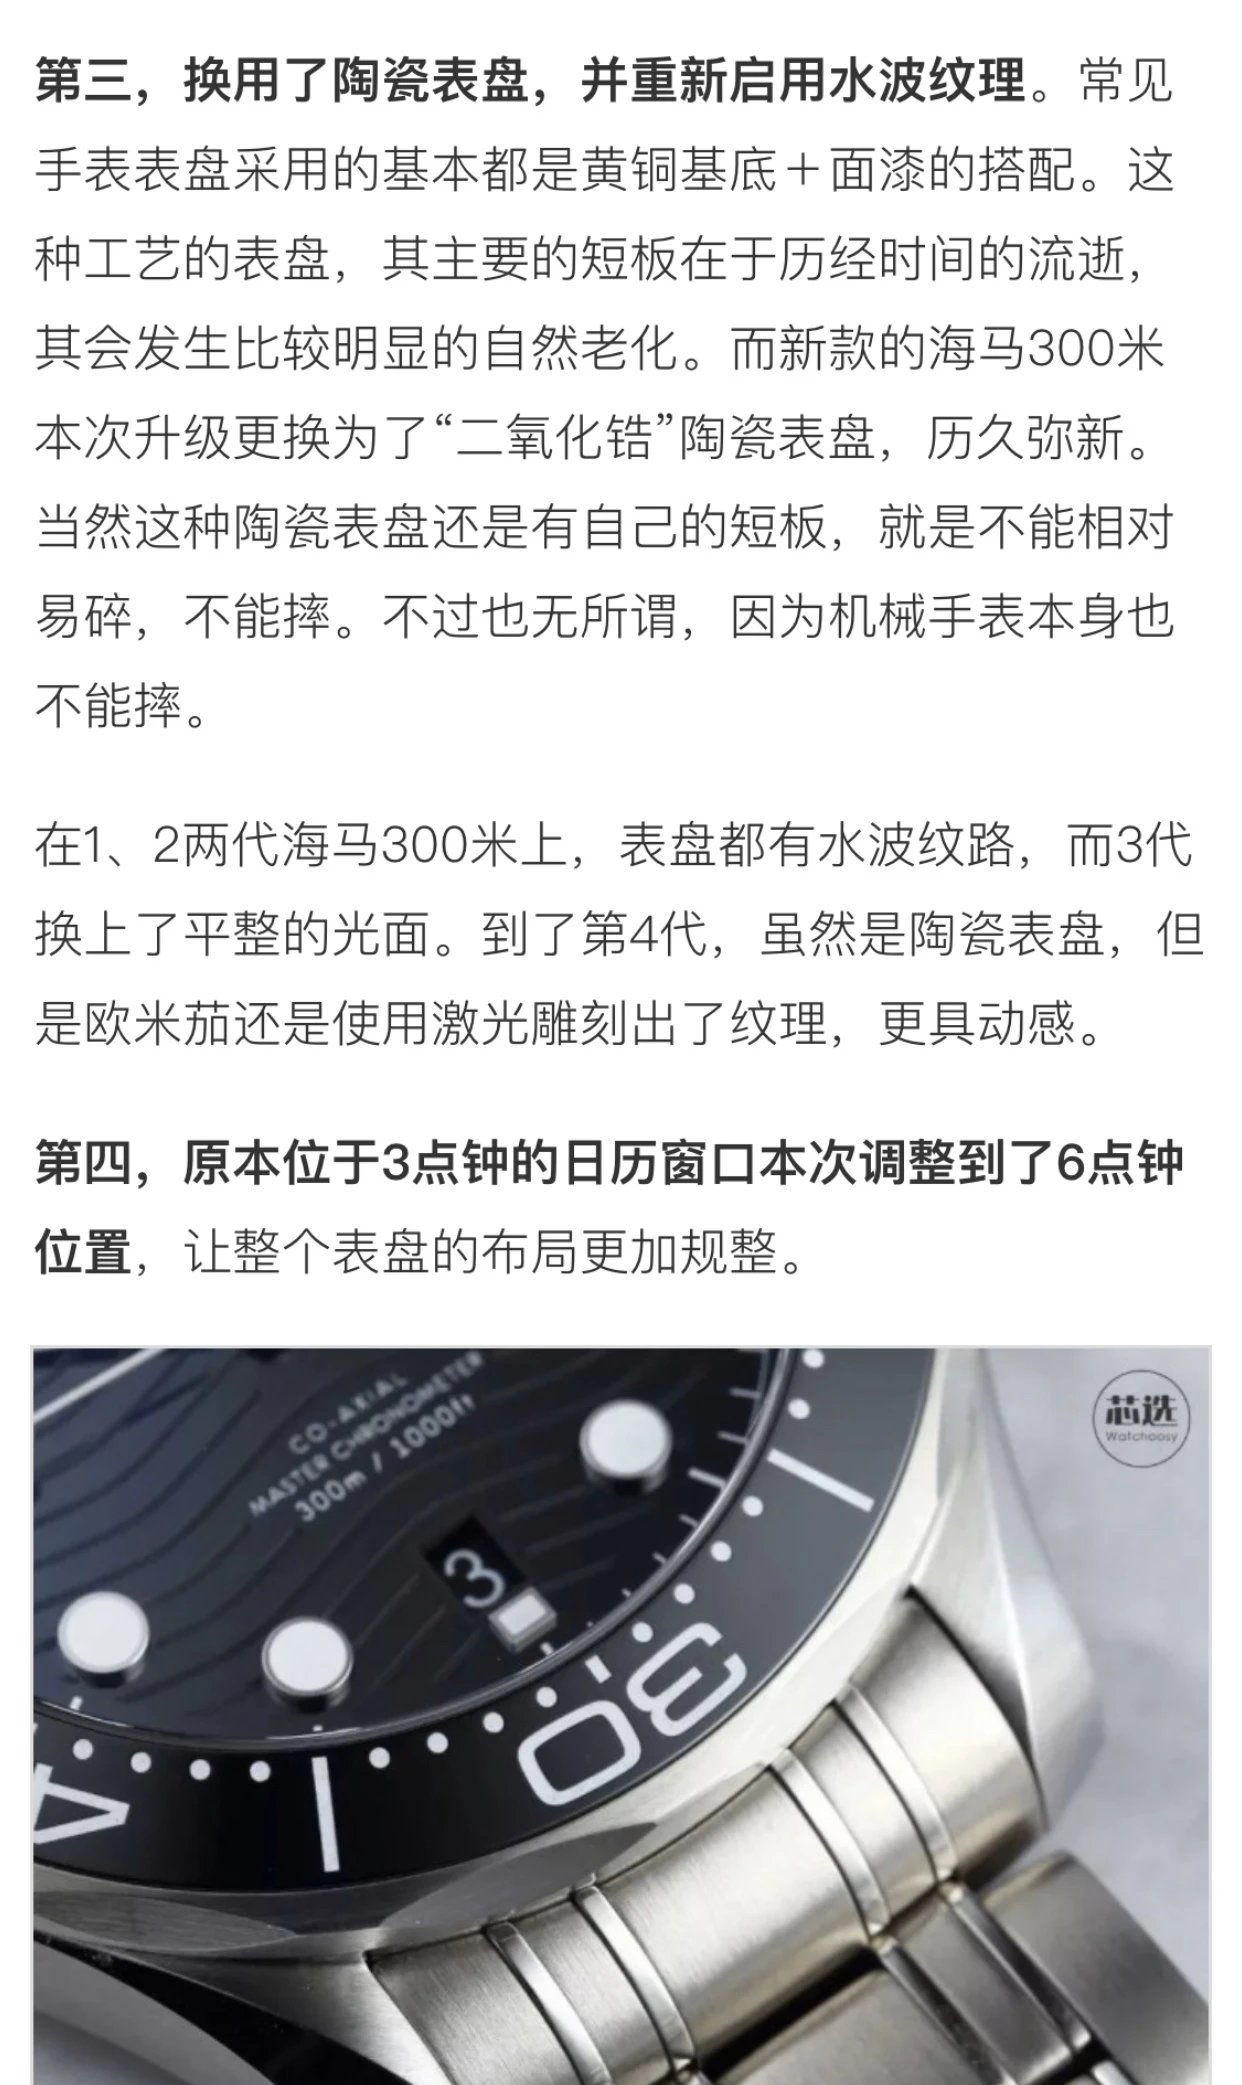 VS新品：新海马300M间玫金男士钢带机械手表。VS版本和正品在12点位外圈口带有贵金属印记表